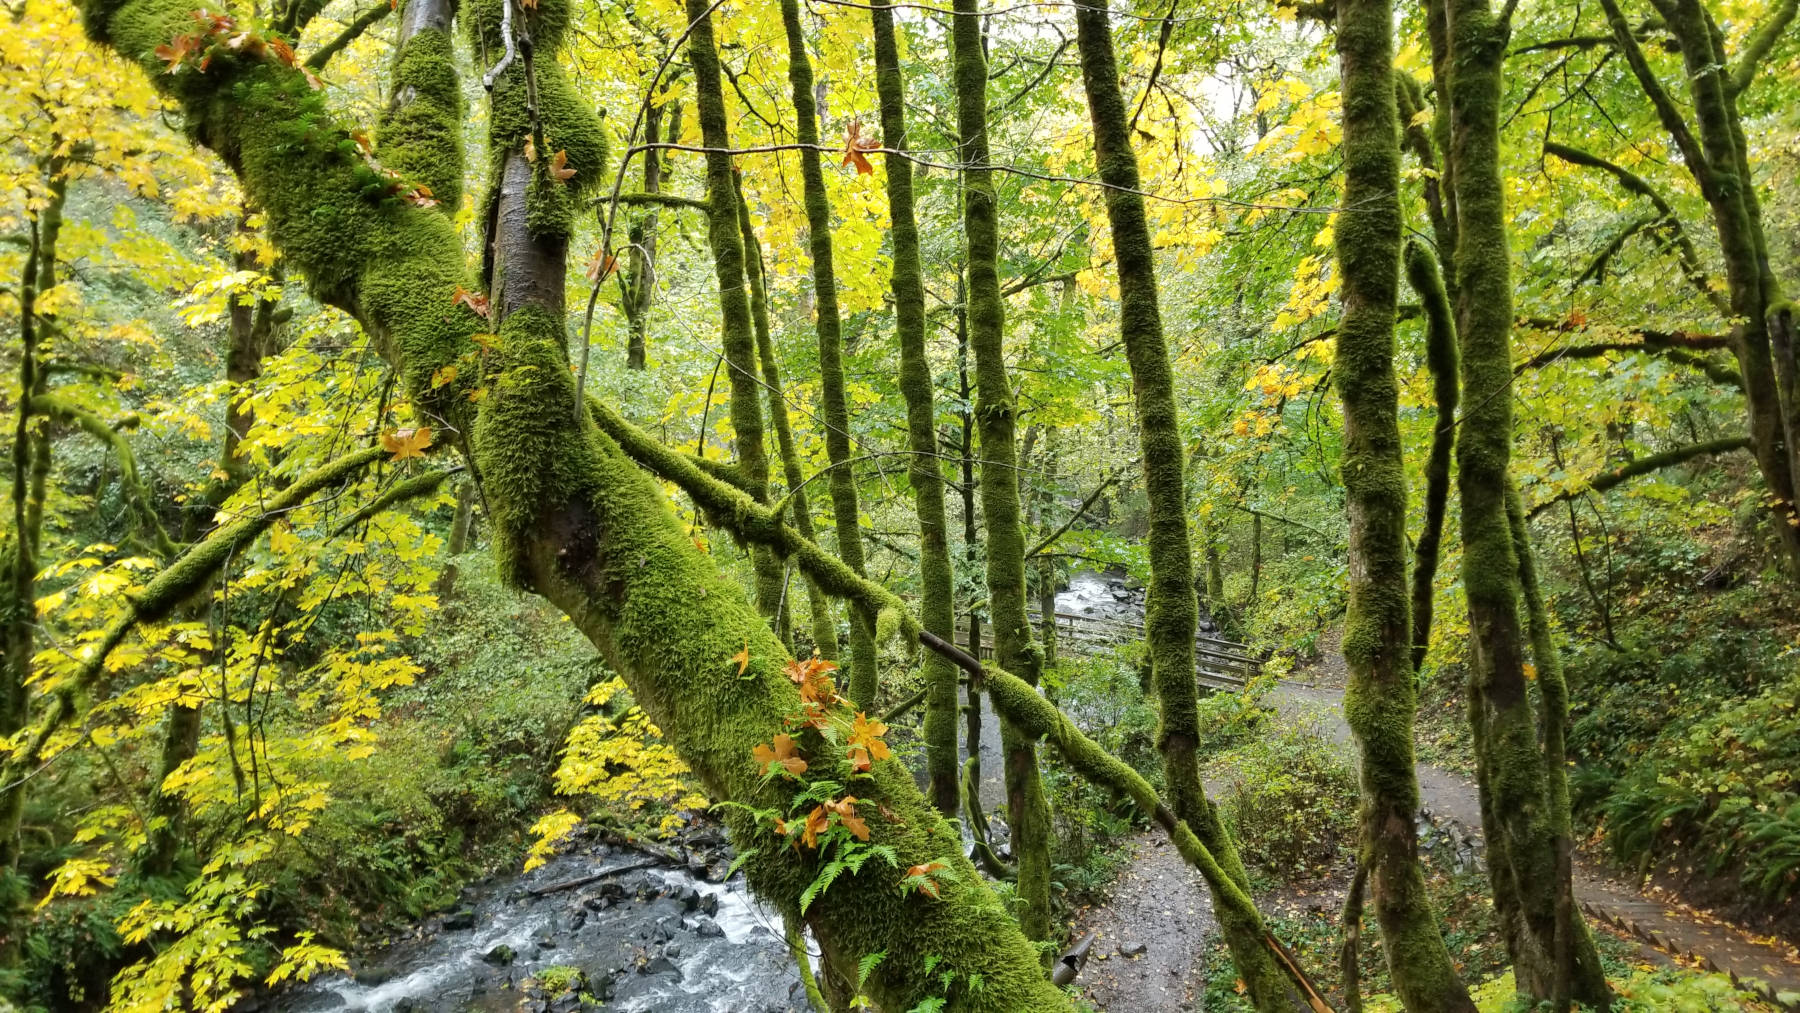 Oregon's lush green landscape is amazing